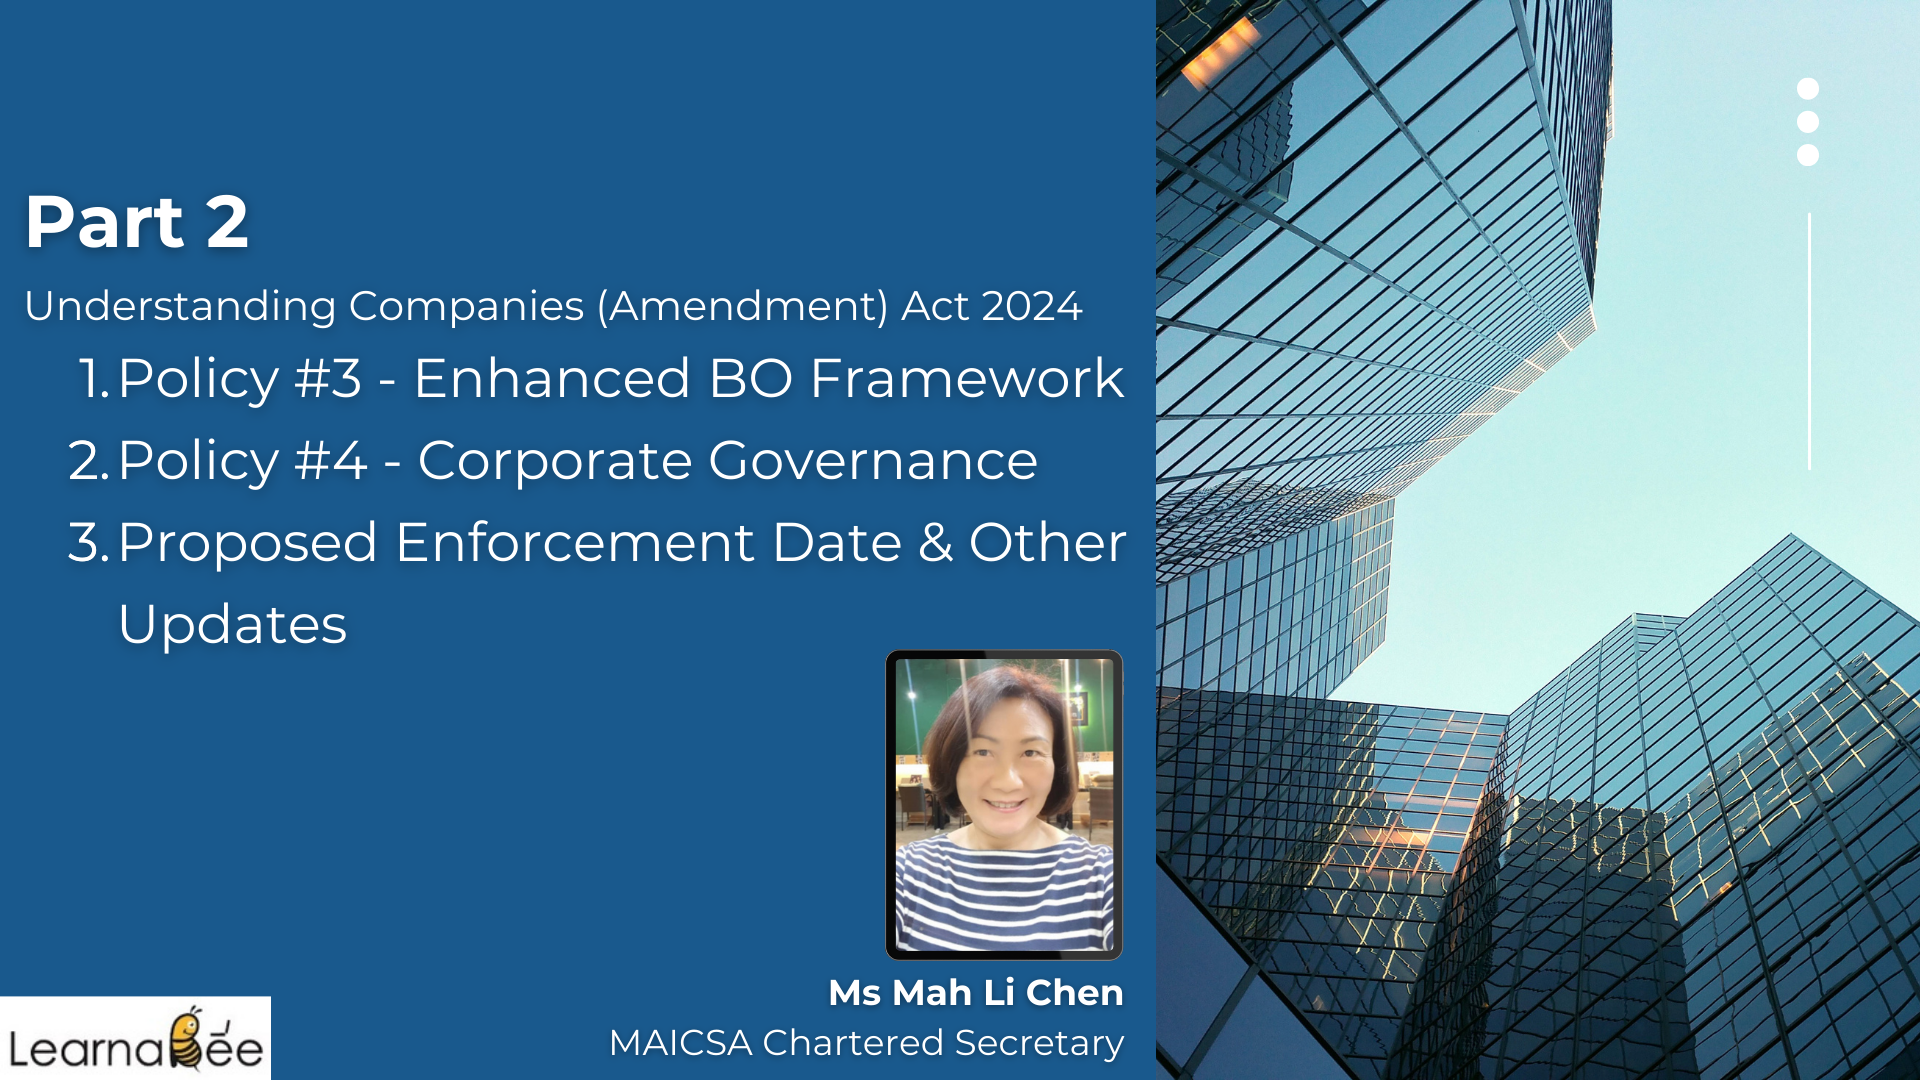 (English) Part 2 - Understanding COMPANIES (AMENDMENT) ACT 2024 by Ms Mah Li Chen (MAICSA Chartered Secretary)